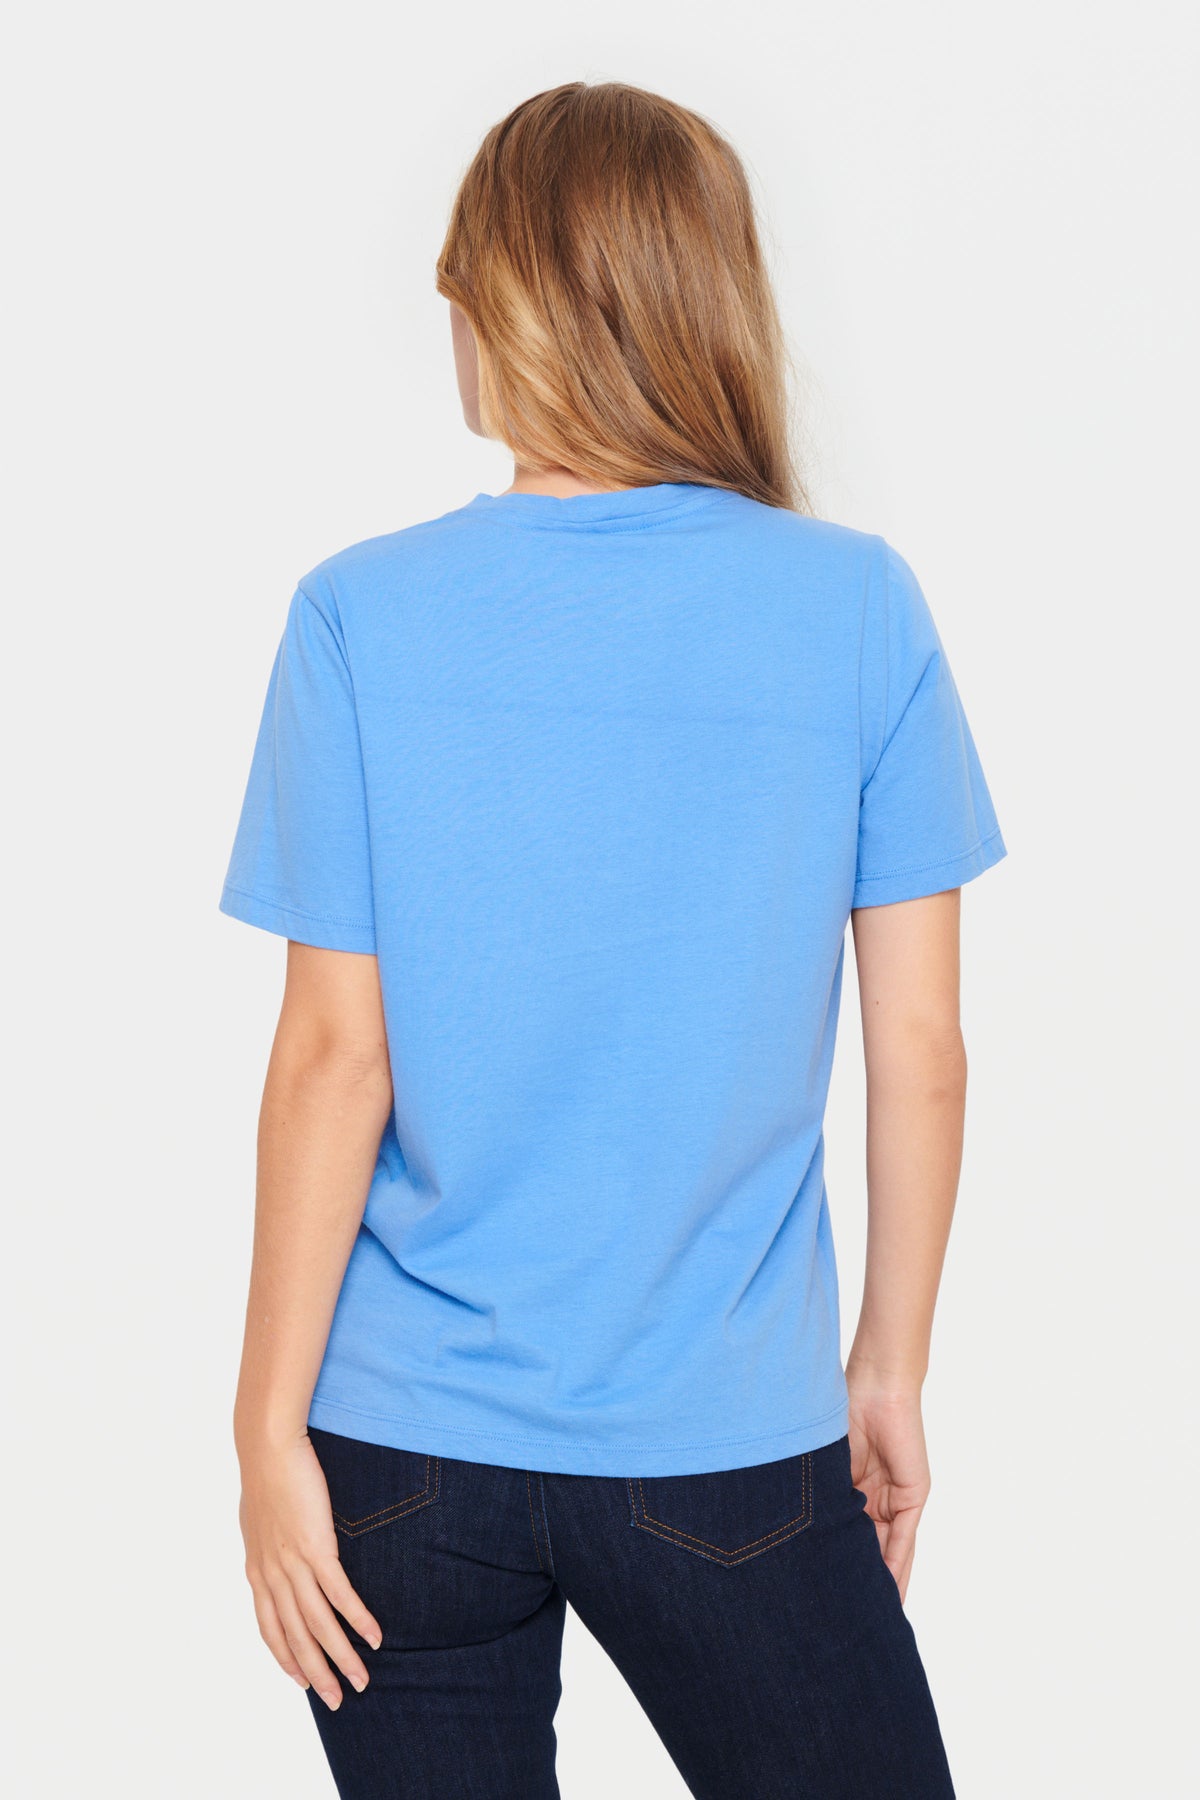 Saint Tropez Dajli Ultramarine Blue 'BISOUS' T-Shirt, 30513177